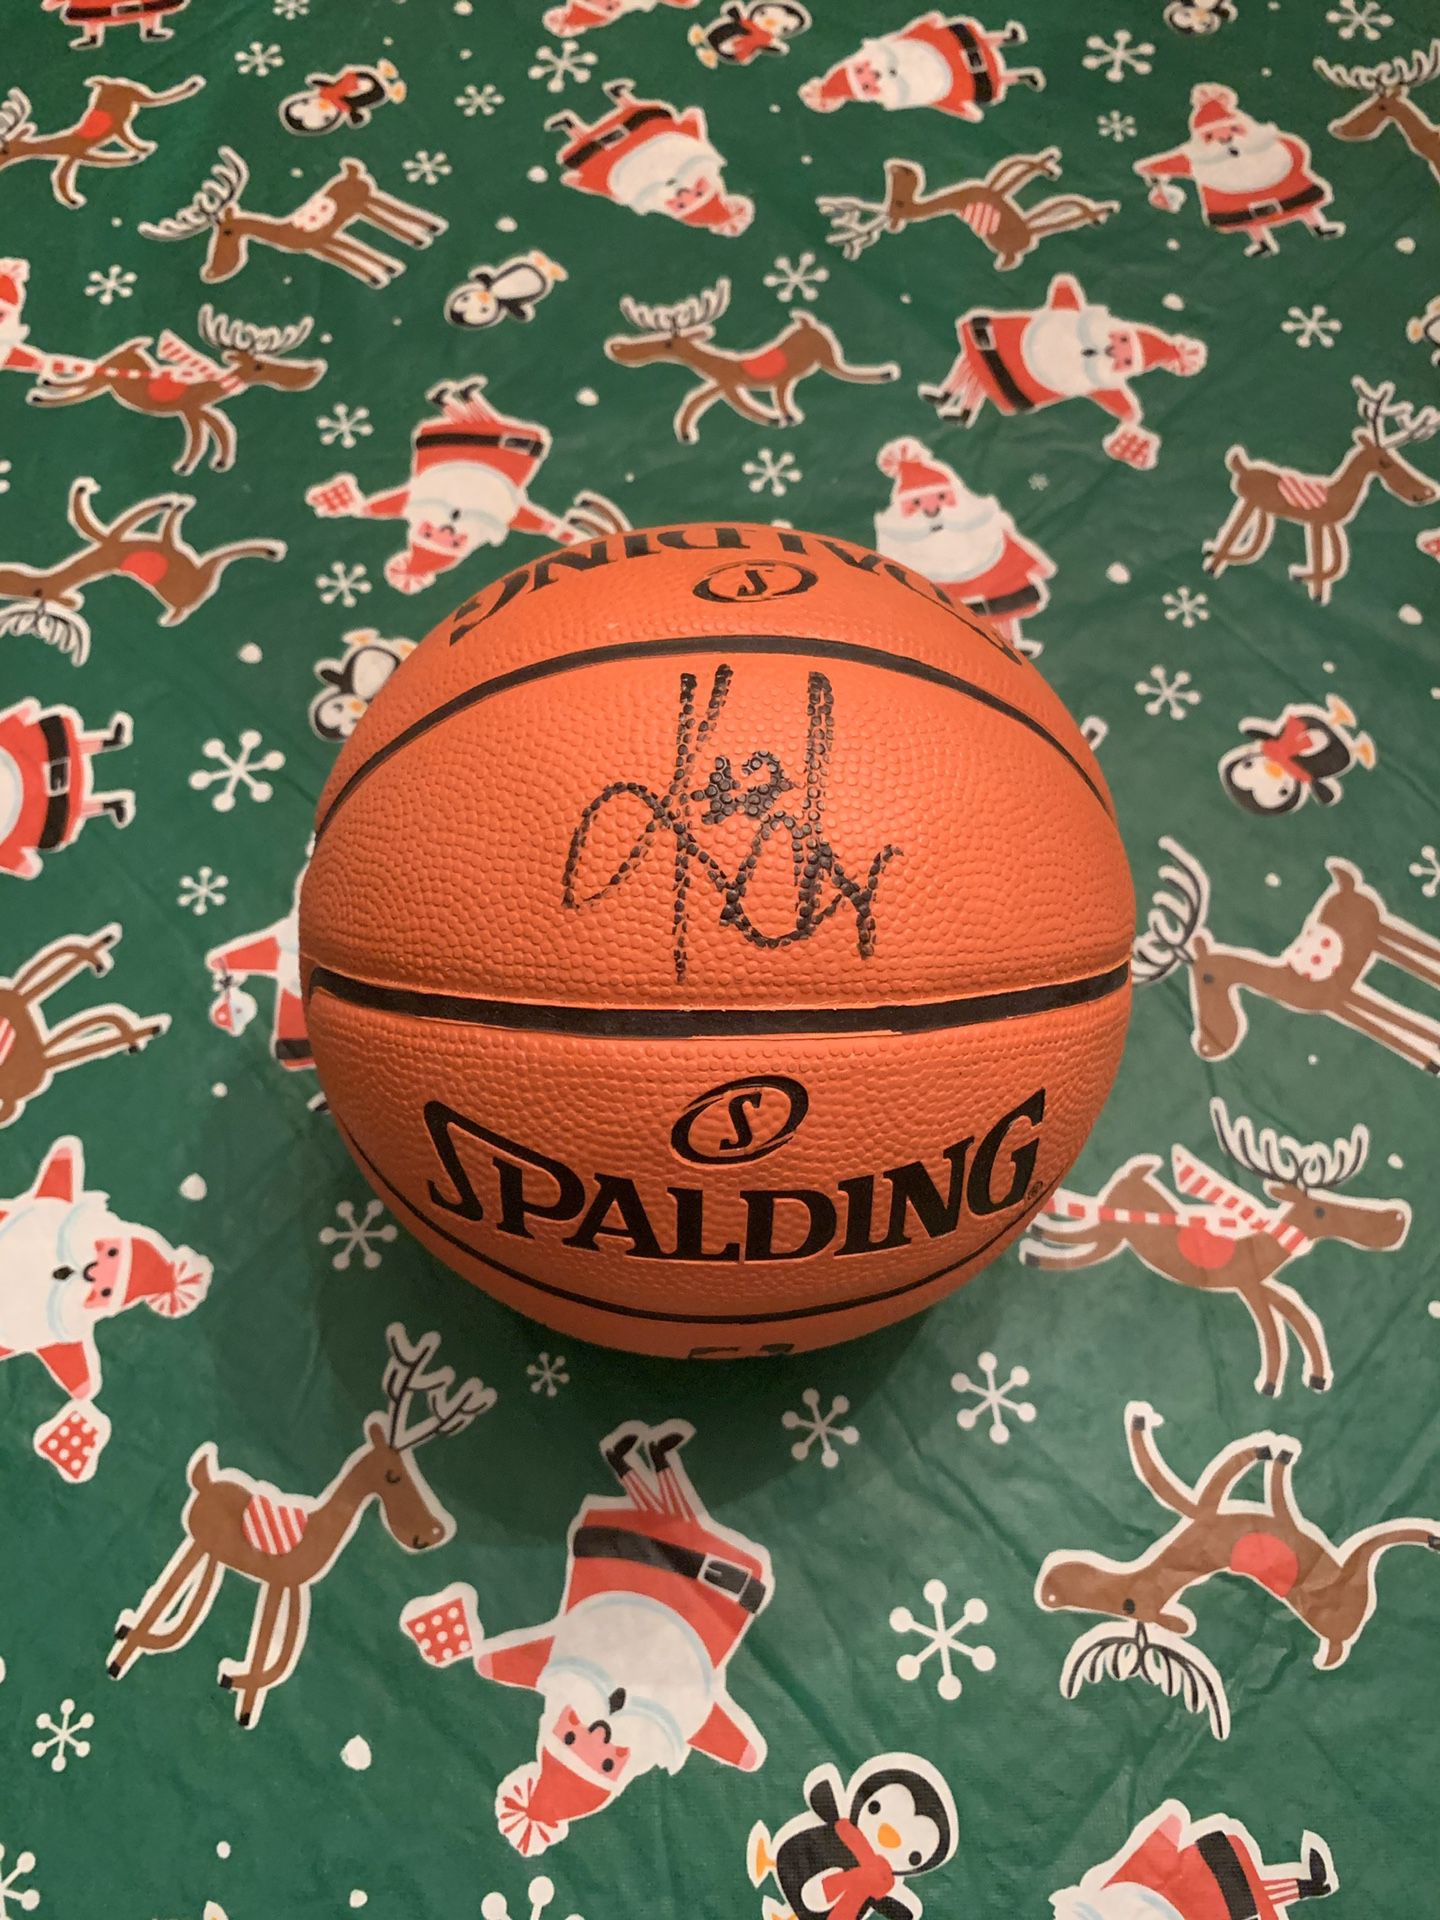 Kyrie Irving Autographed Mini Basketball